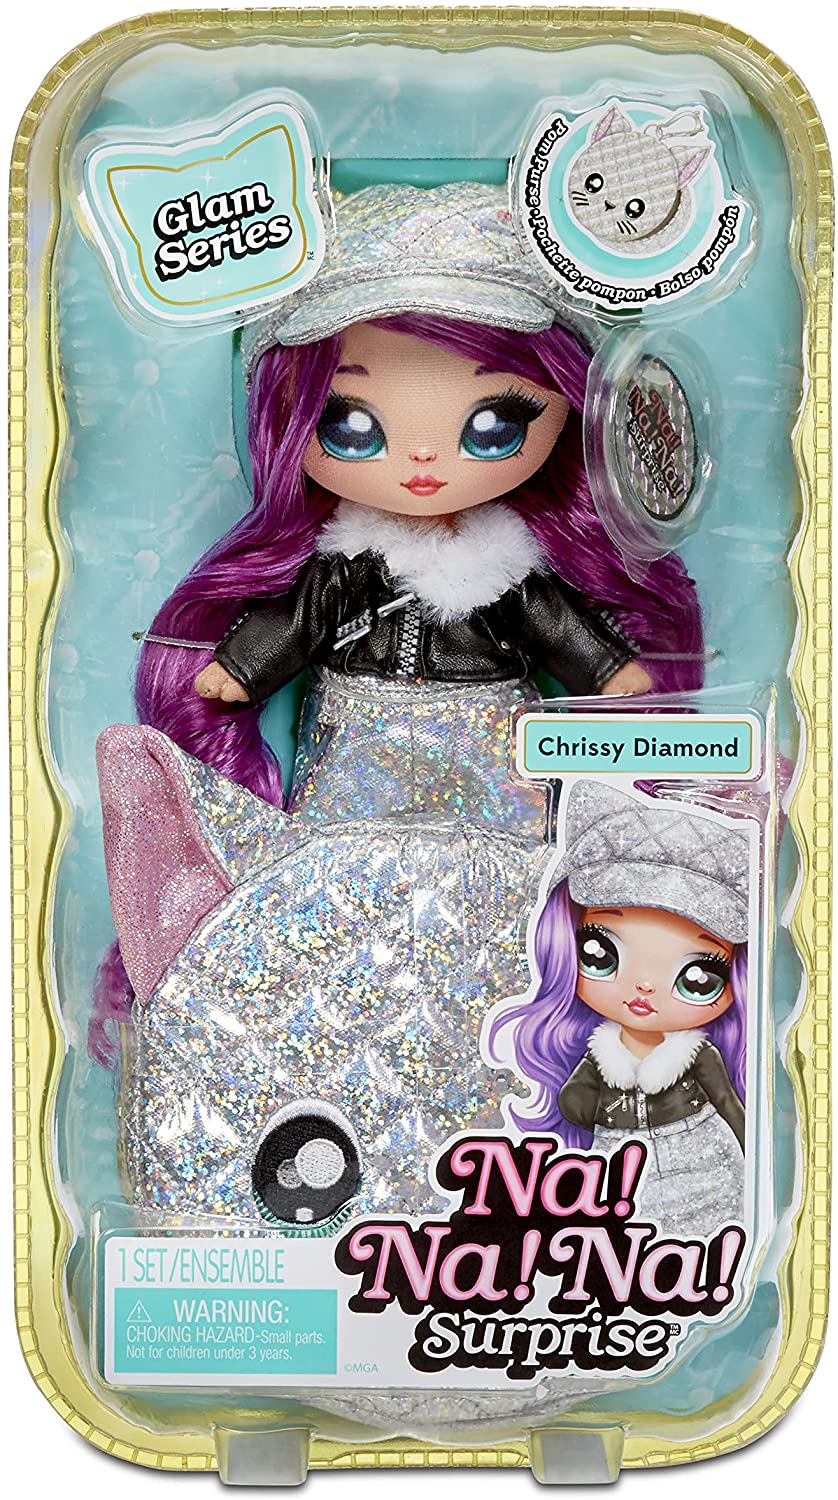 Na Na Na Surprise Glam Series doll Chrissy Diamond